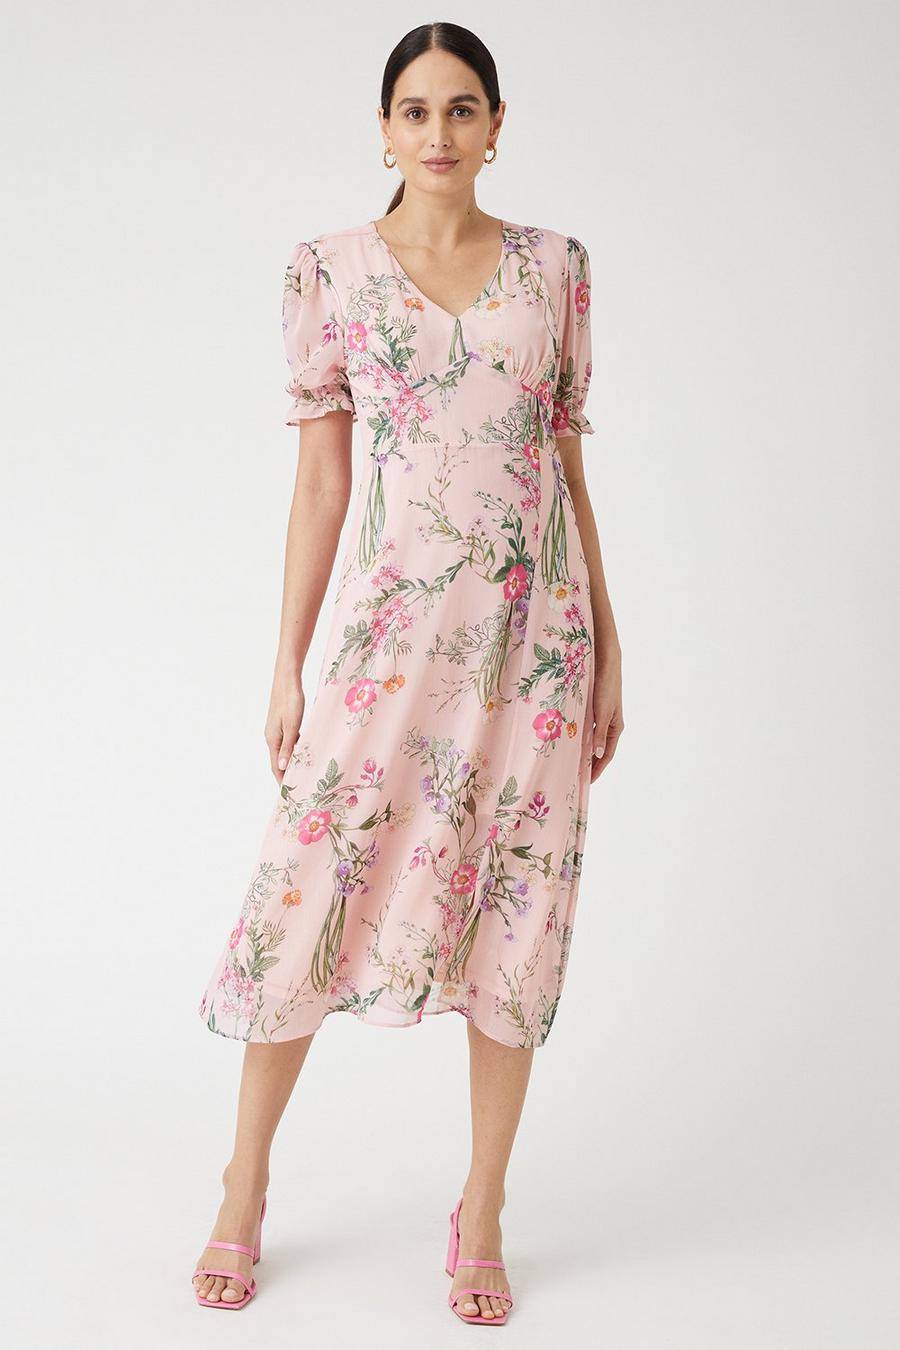 Blush Floral Tea Dress